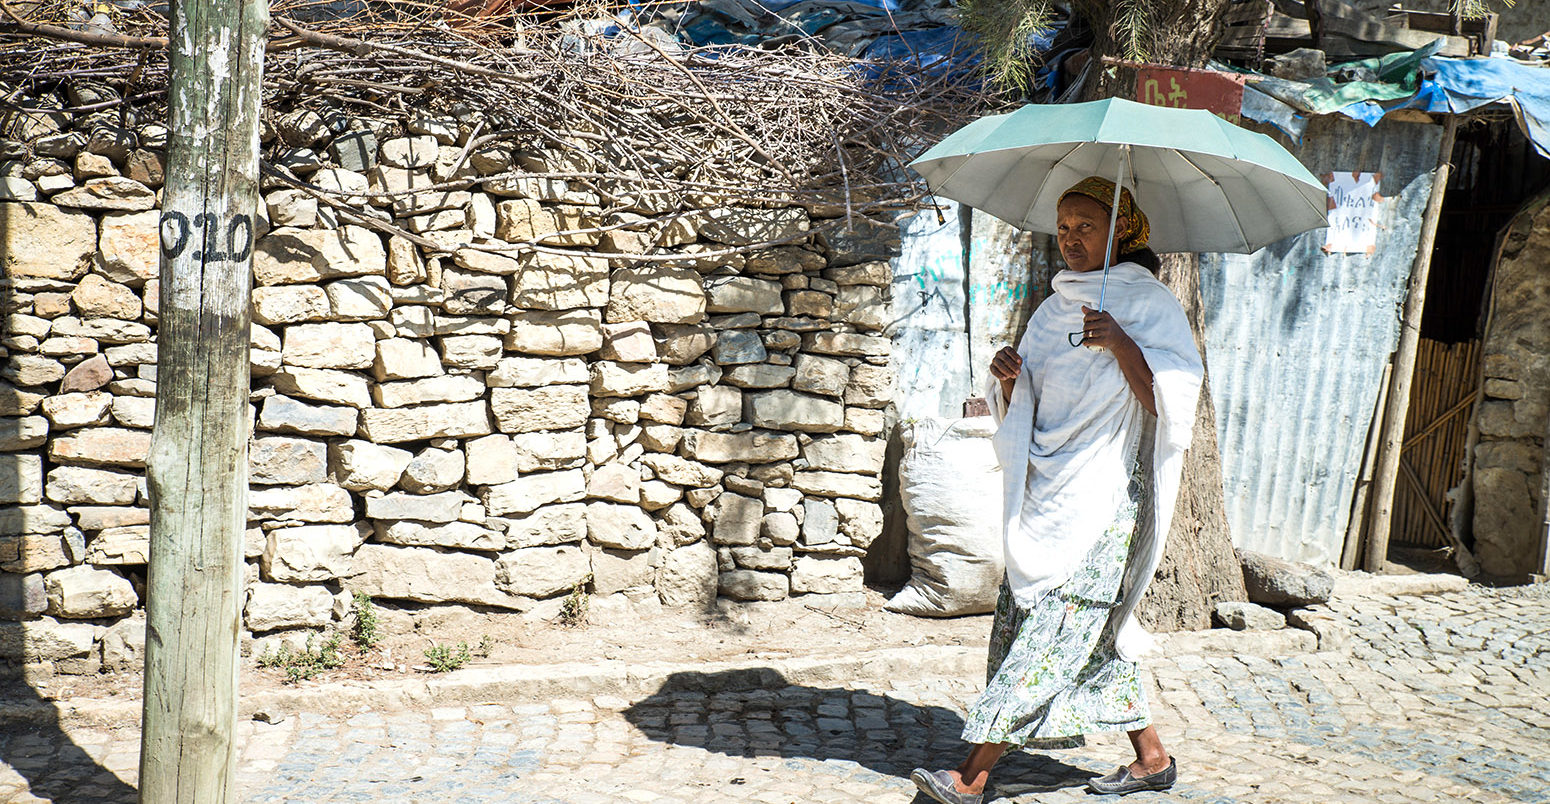 Protecting from the sun, Mekelle, Ethiopia. Credit: Ivoha / Alamy Stock Photo. EE4NFR